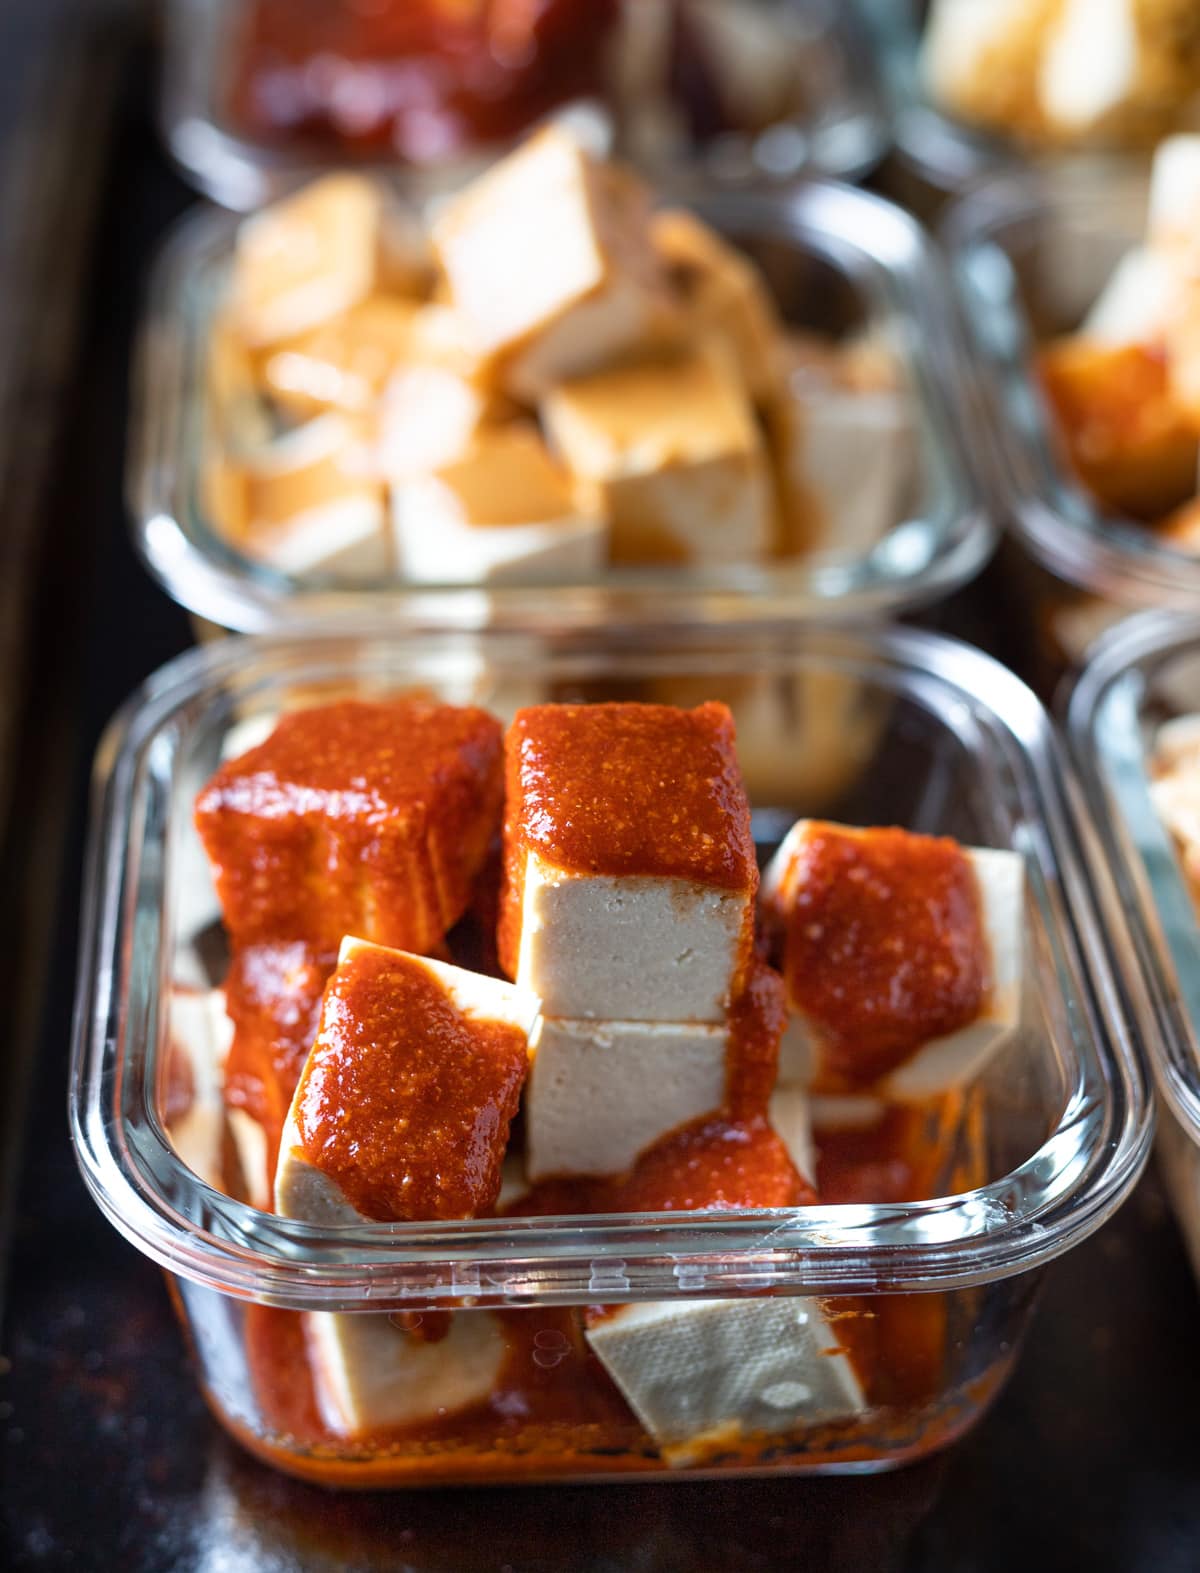 Pressed tofu cubes soaking up flavorful marinade.